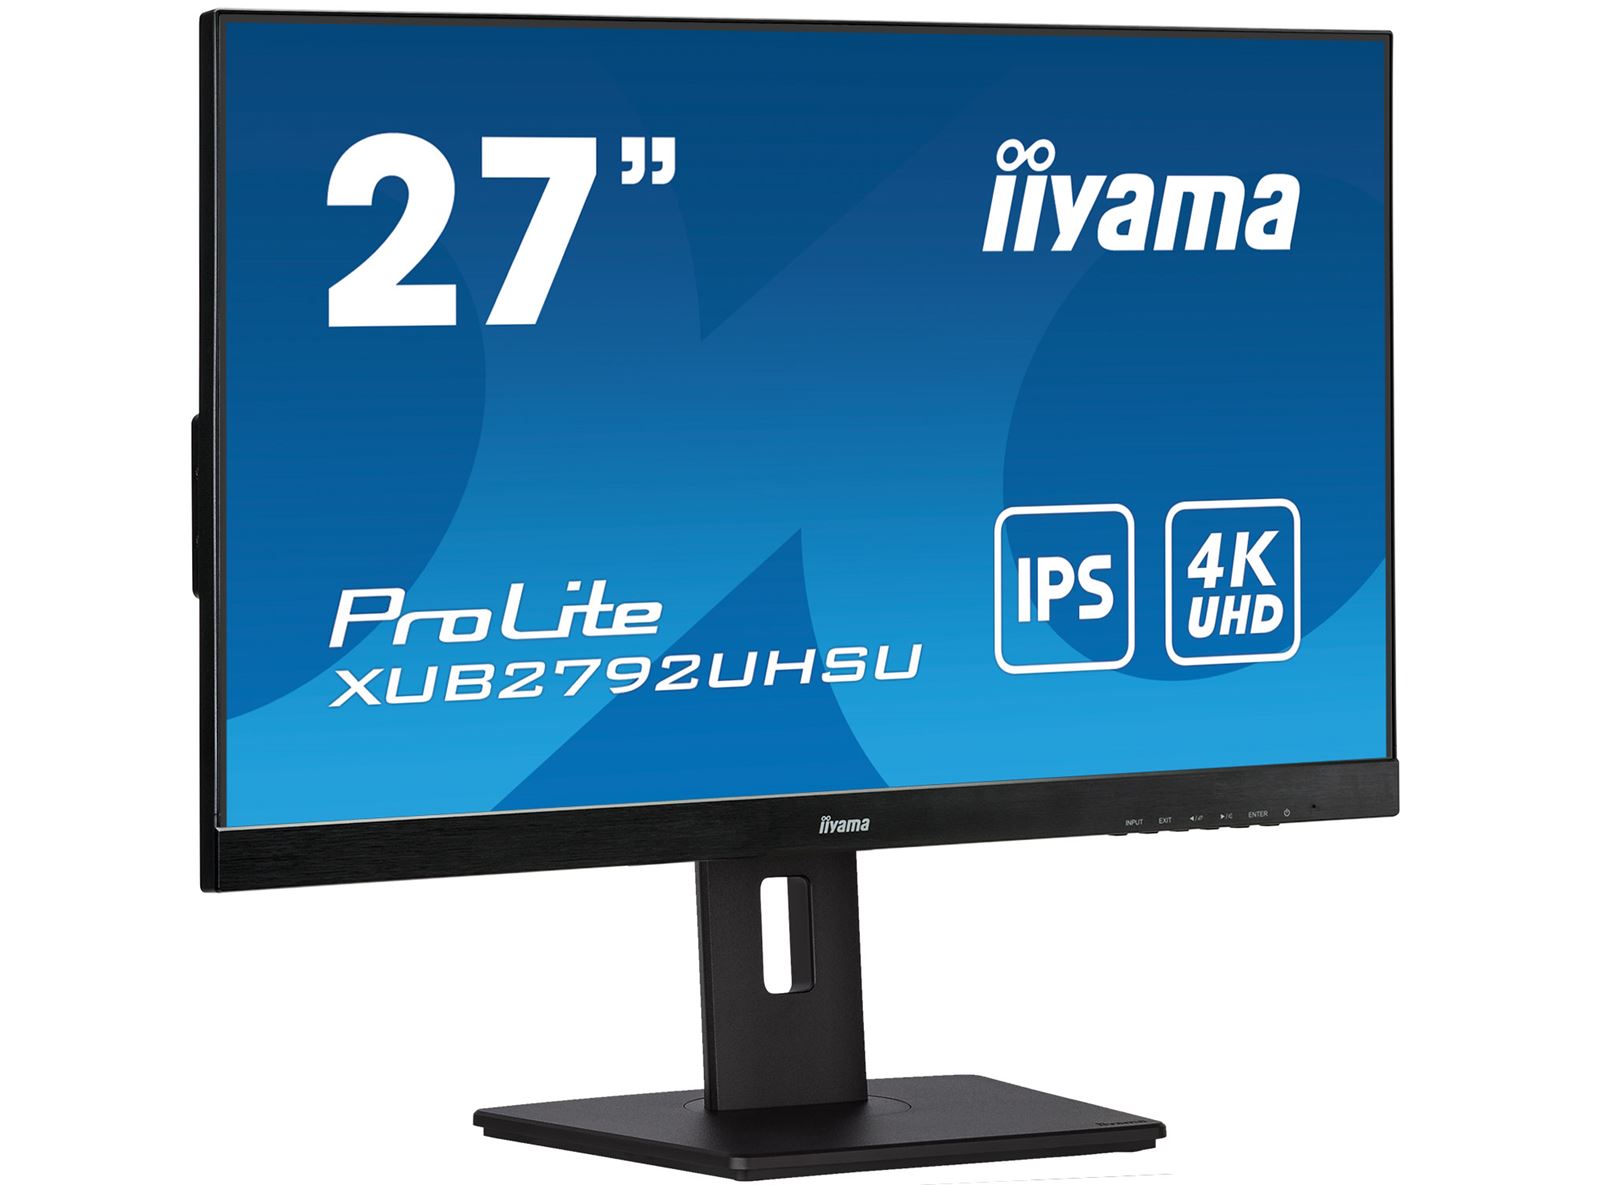 iiyama ProLite XUB2792UHSU-B5 27